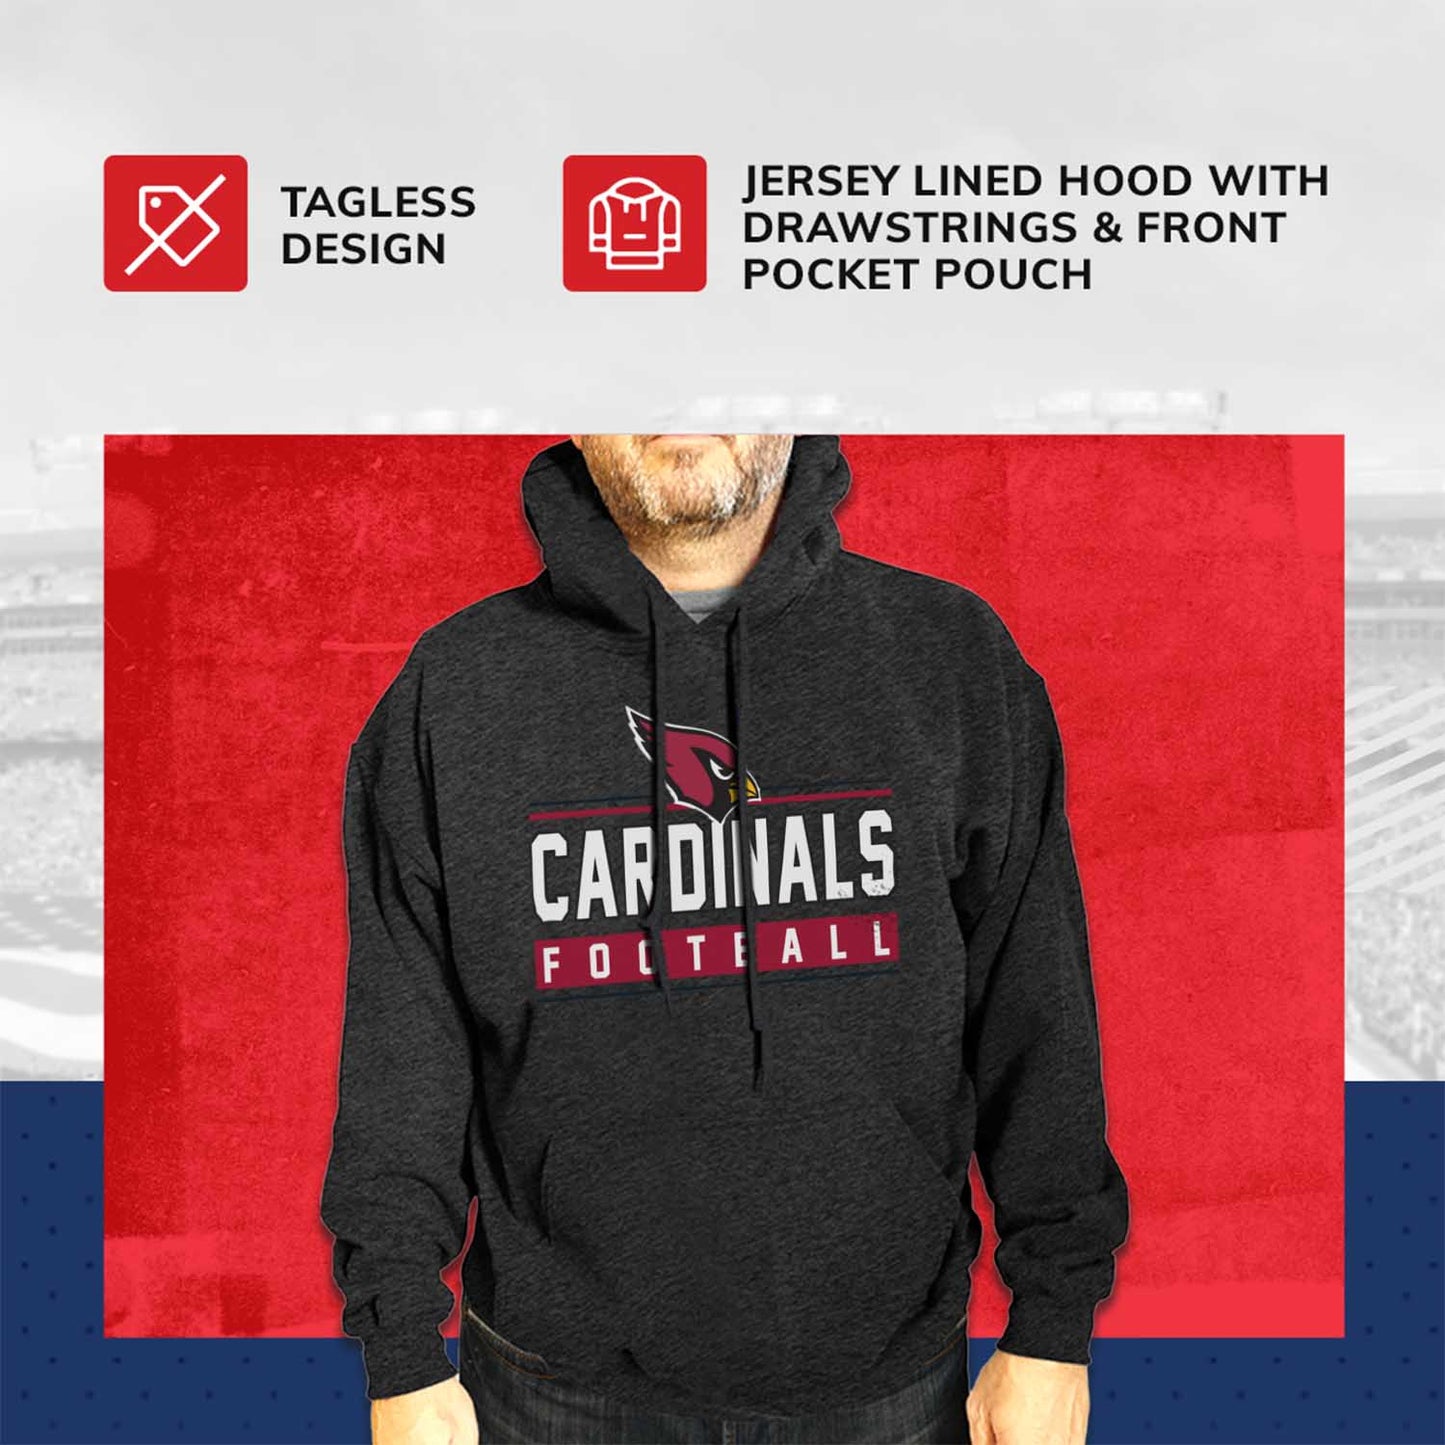 Arizona Cardinals NFL Adult True Fan Hooded Charcoal Sweatshirt - Charcoal